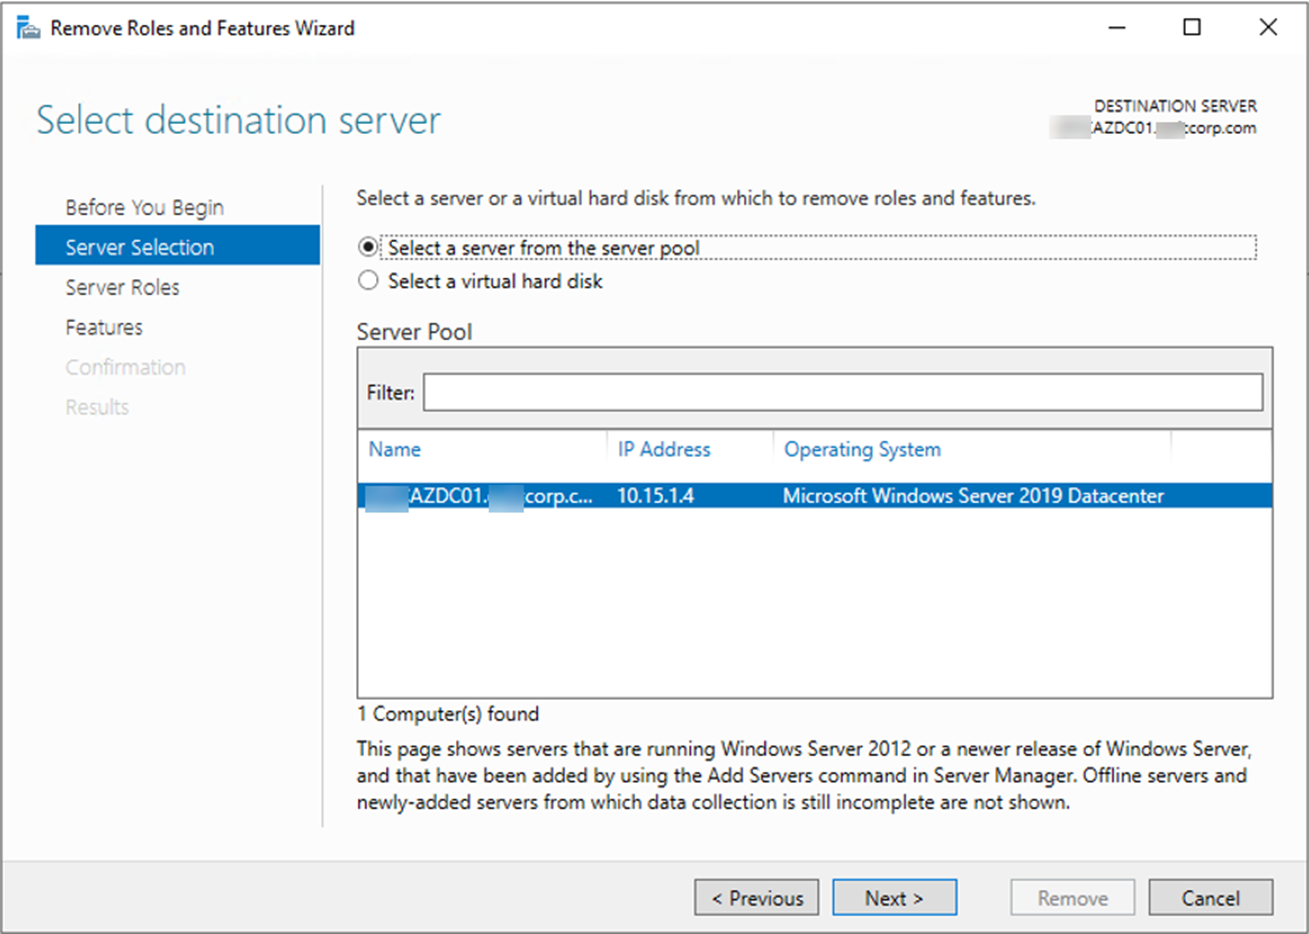 101120 0520 HowtoDemote19 - How to Demote Microsoft Windows Server 2019 Domain Controller Virtual Machine at Azure